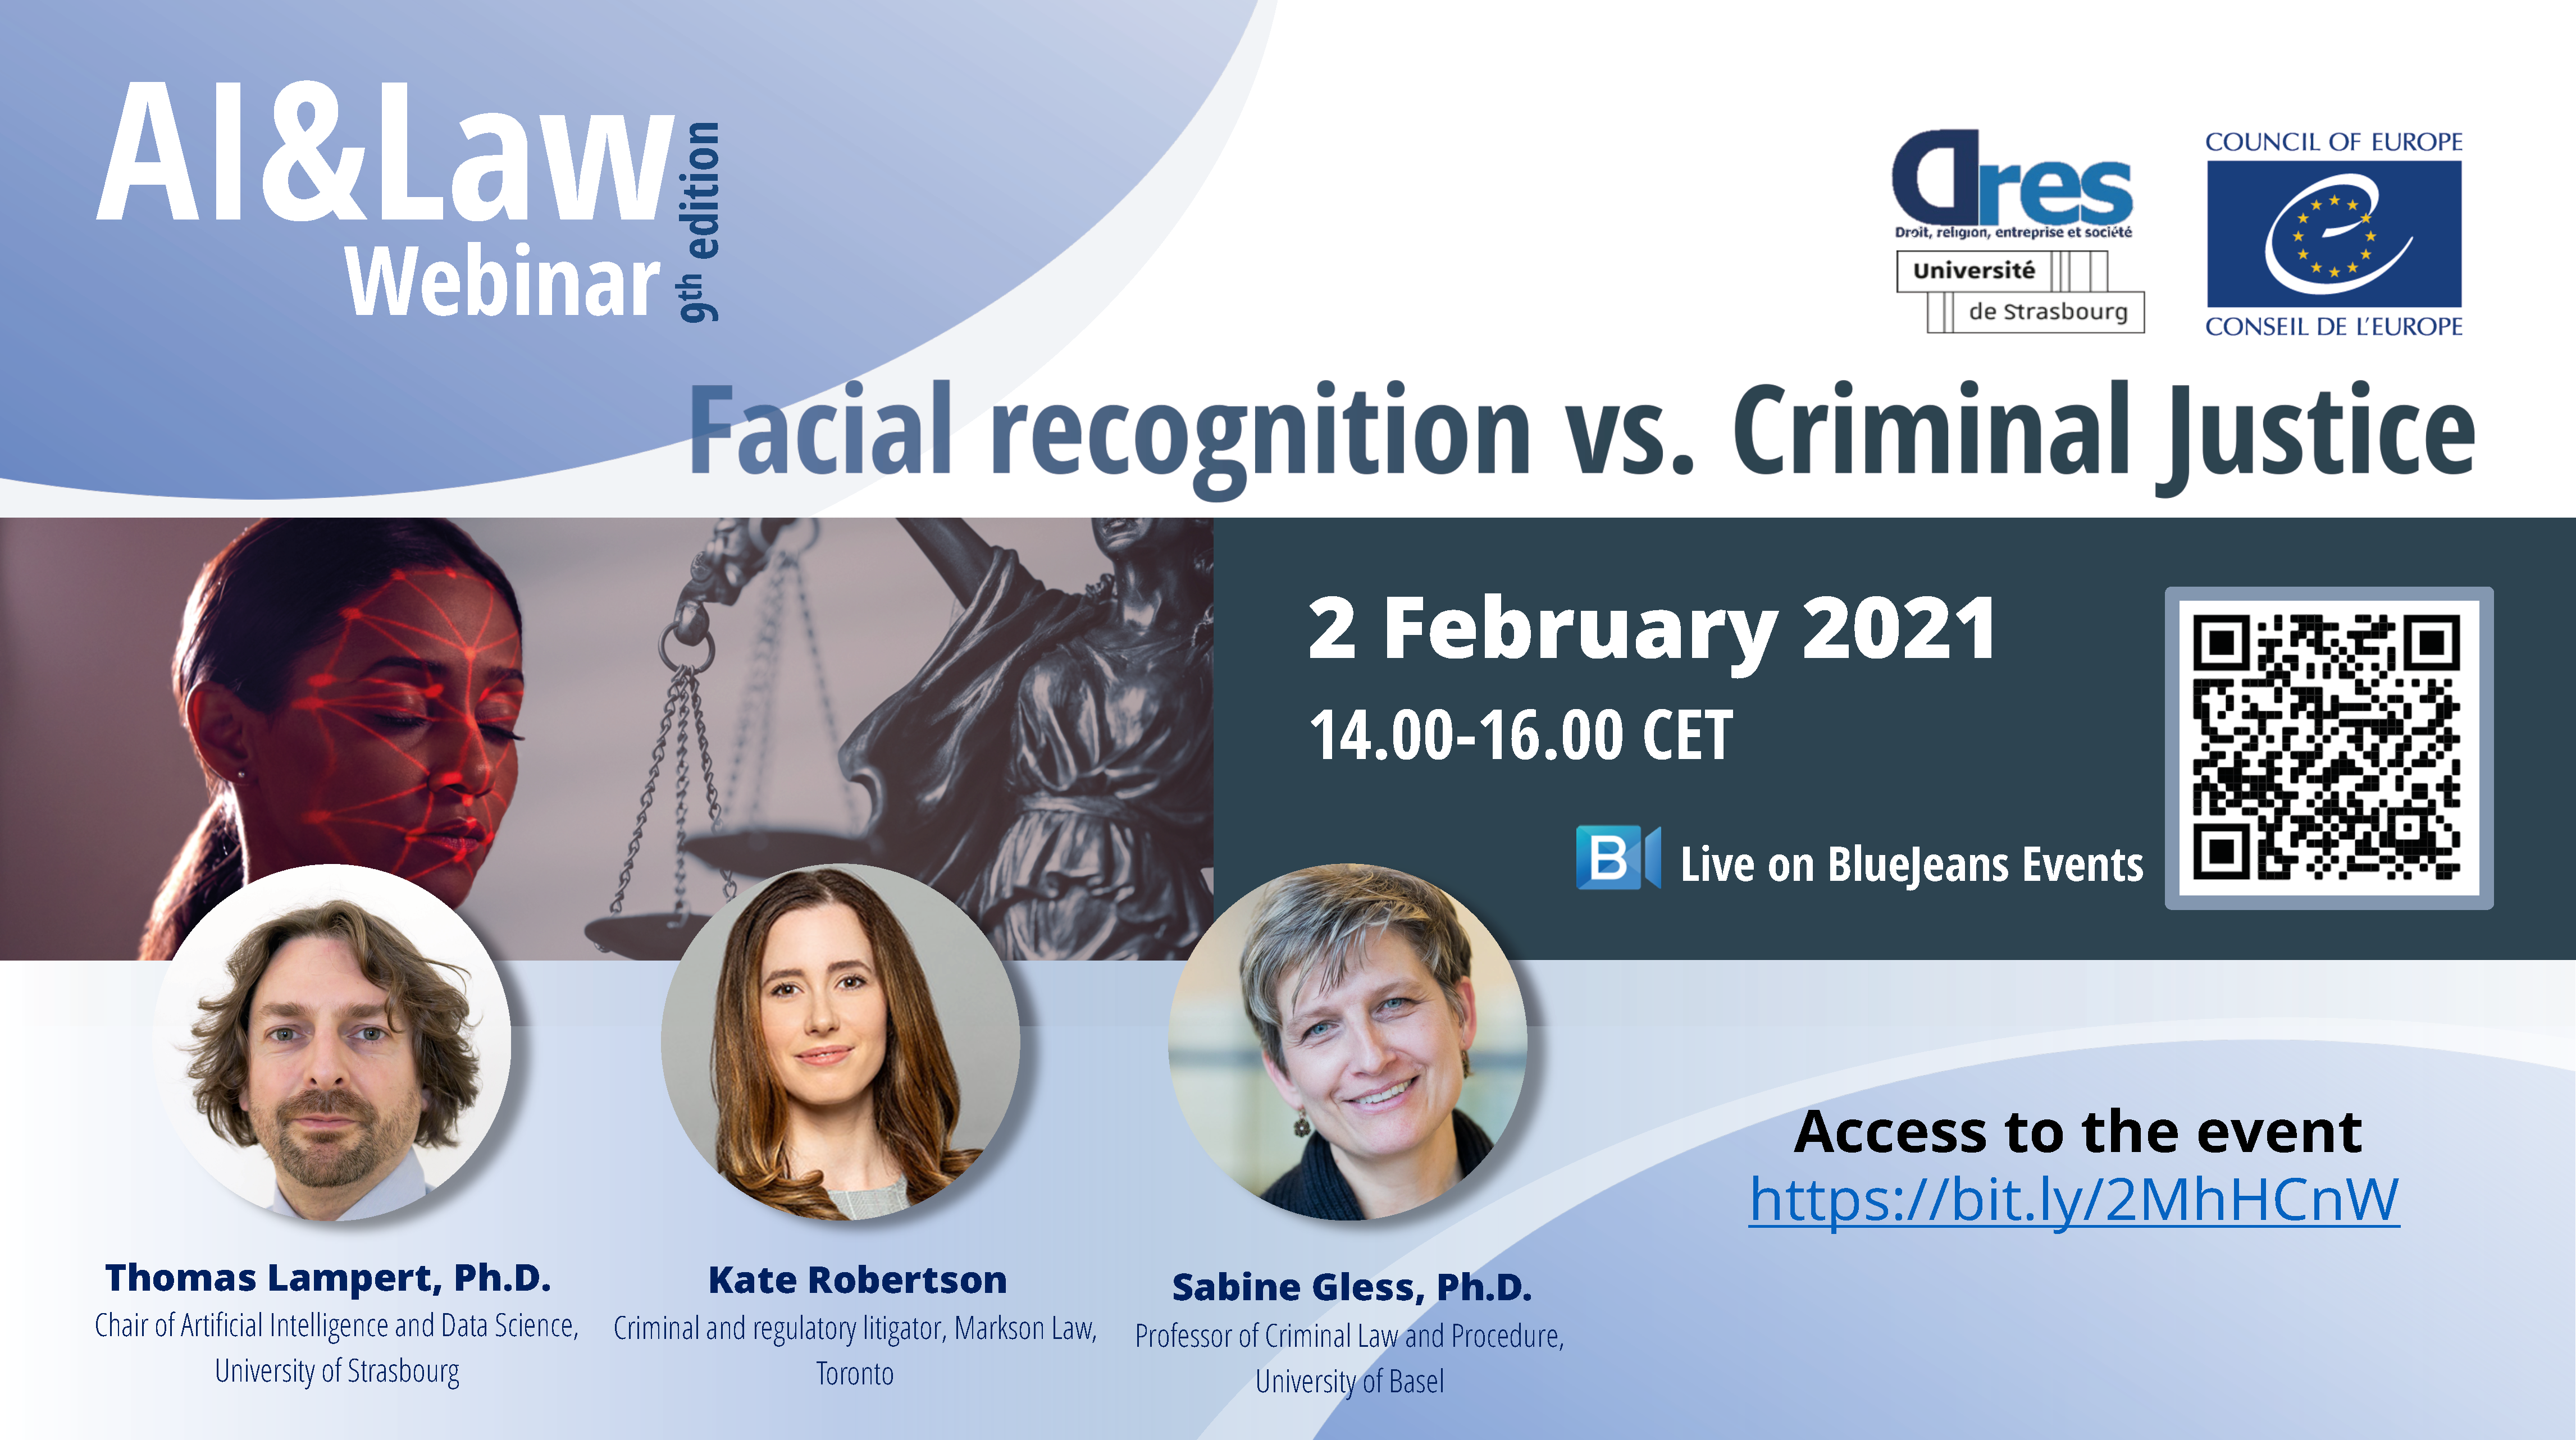 AI&Law Webinar #9: Facial recognition vs. Criminal Justice